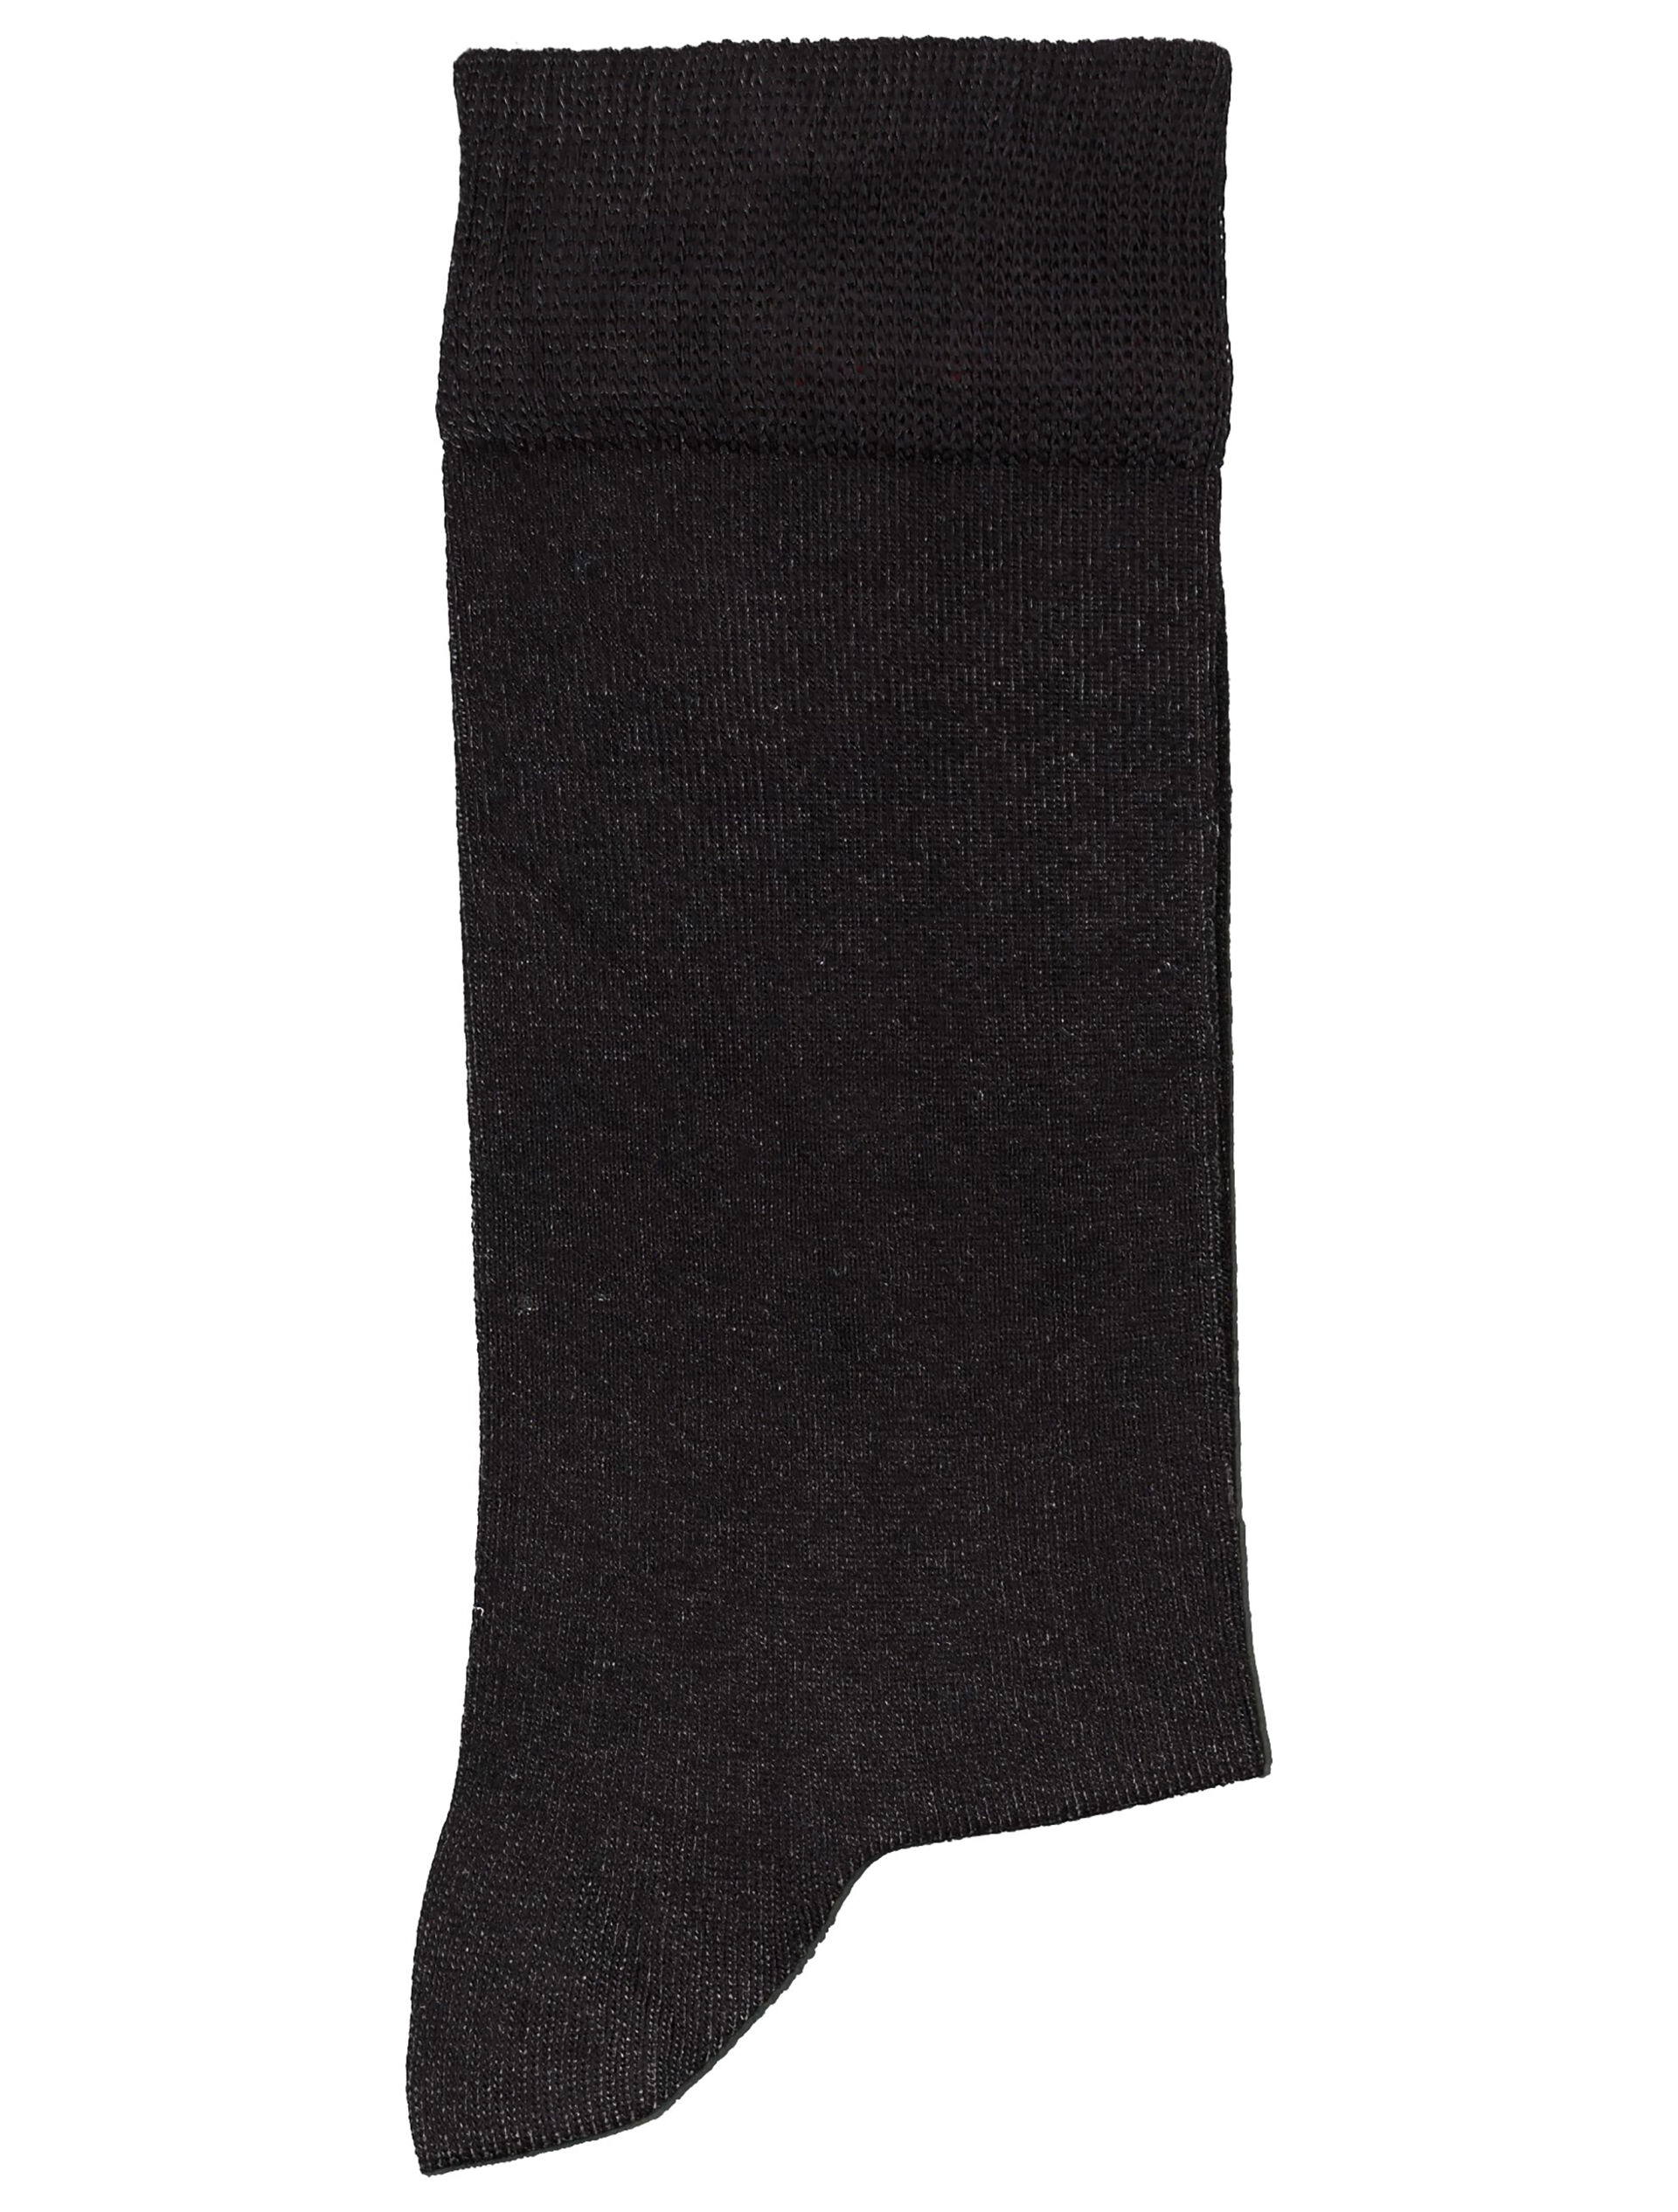 Socks 30-91201